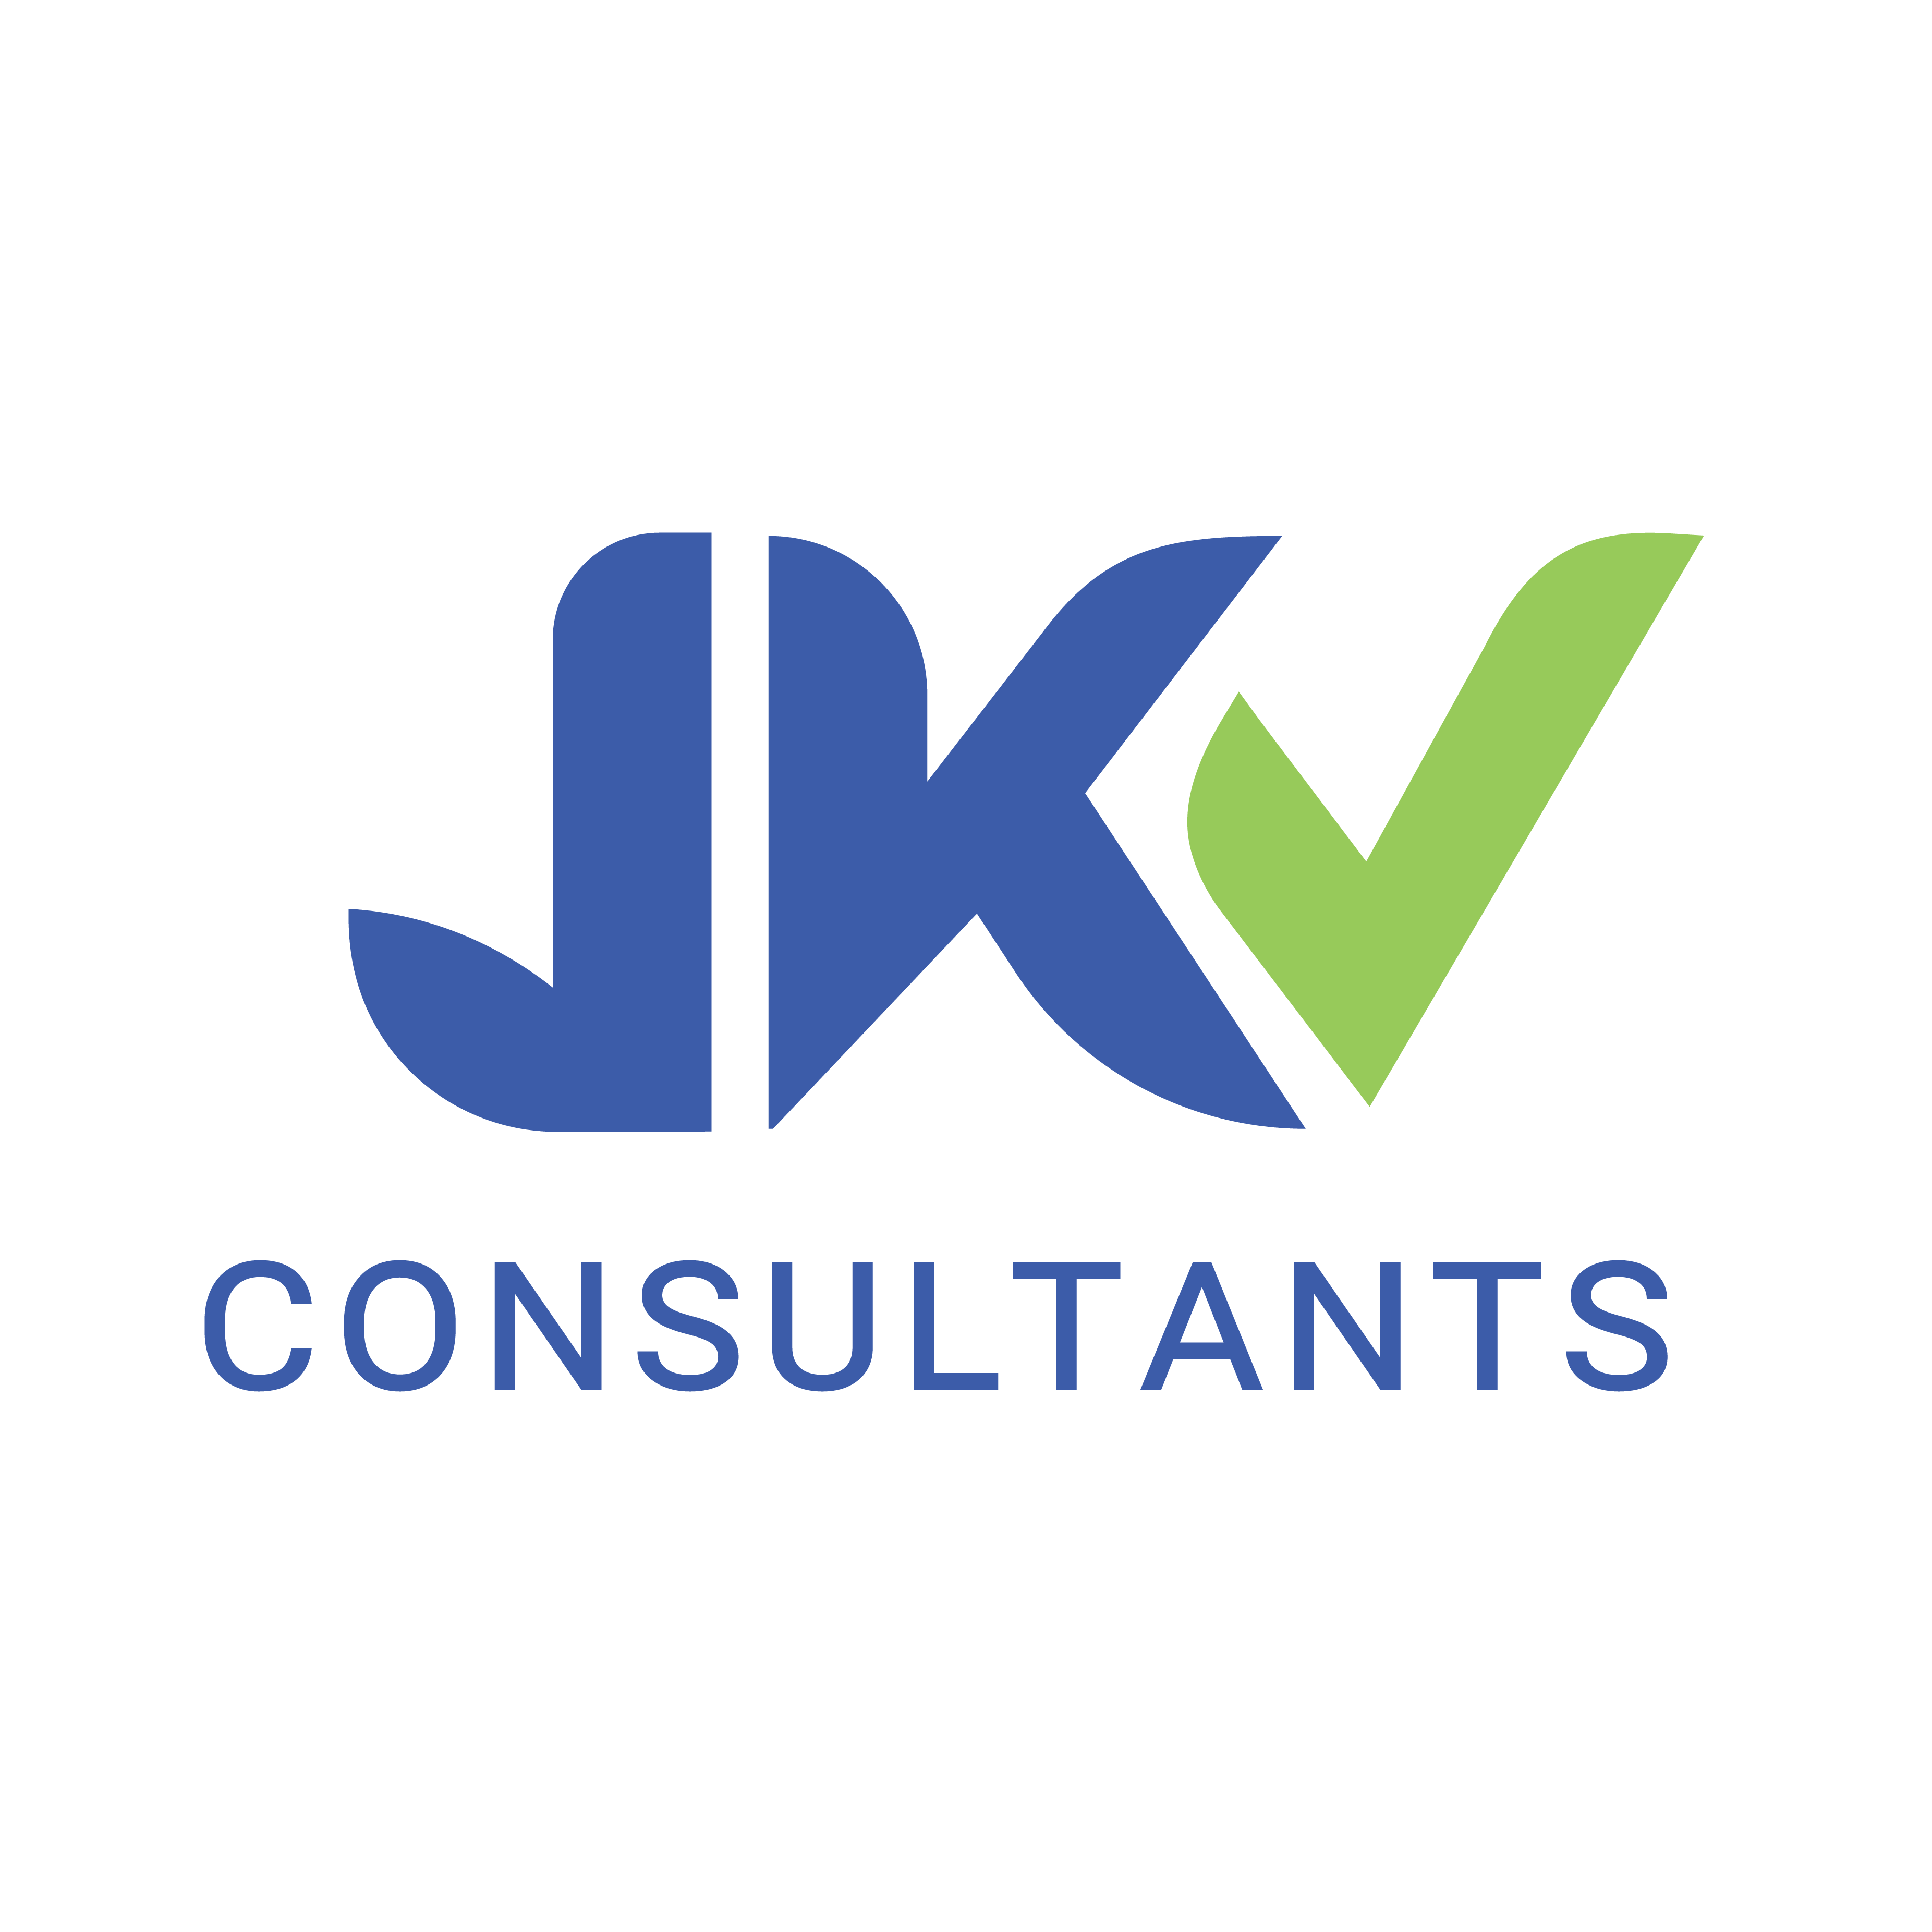 JKV Consultants